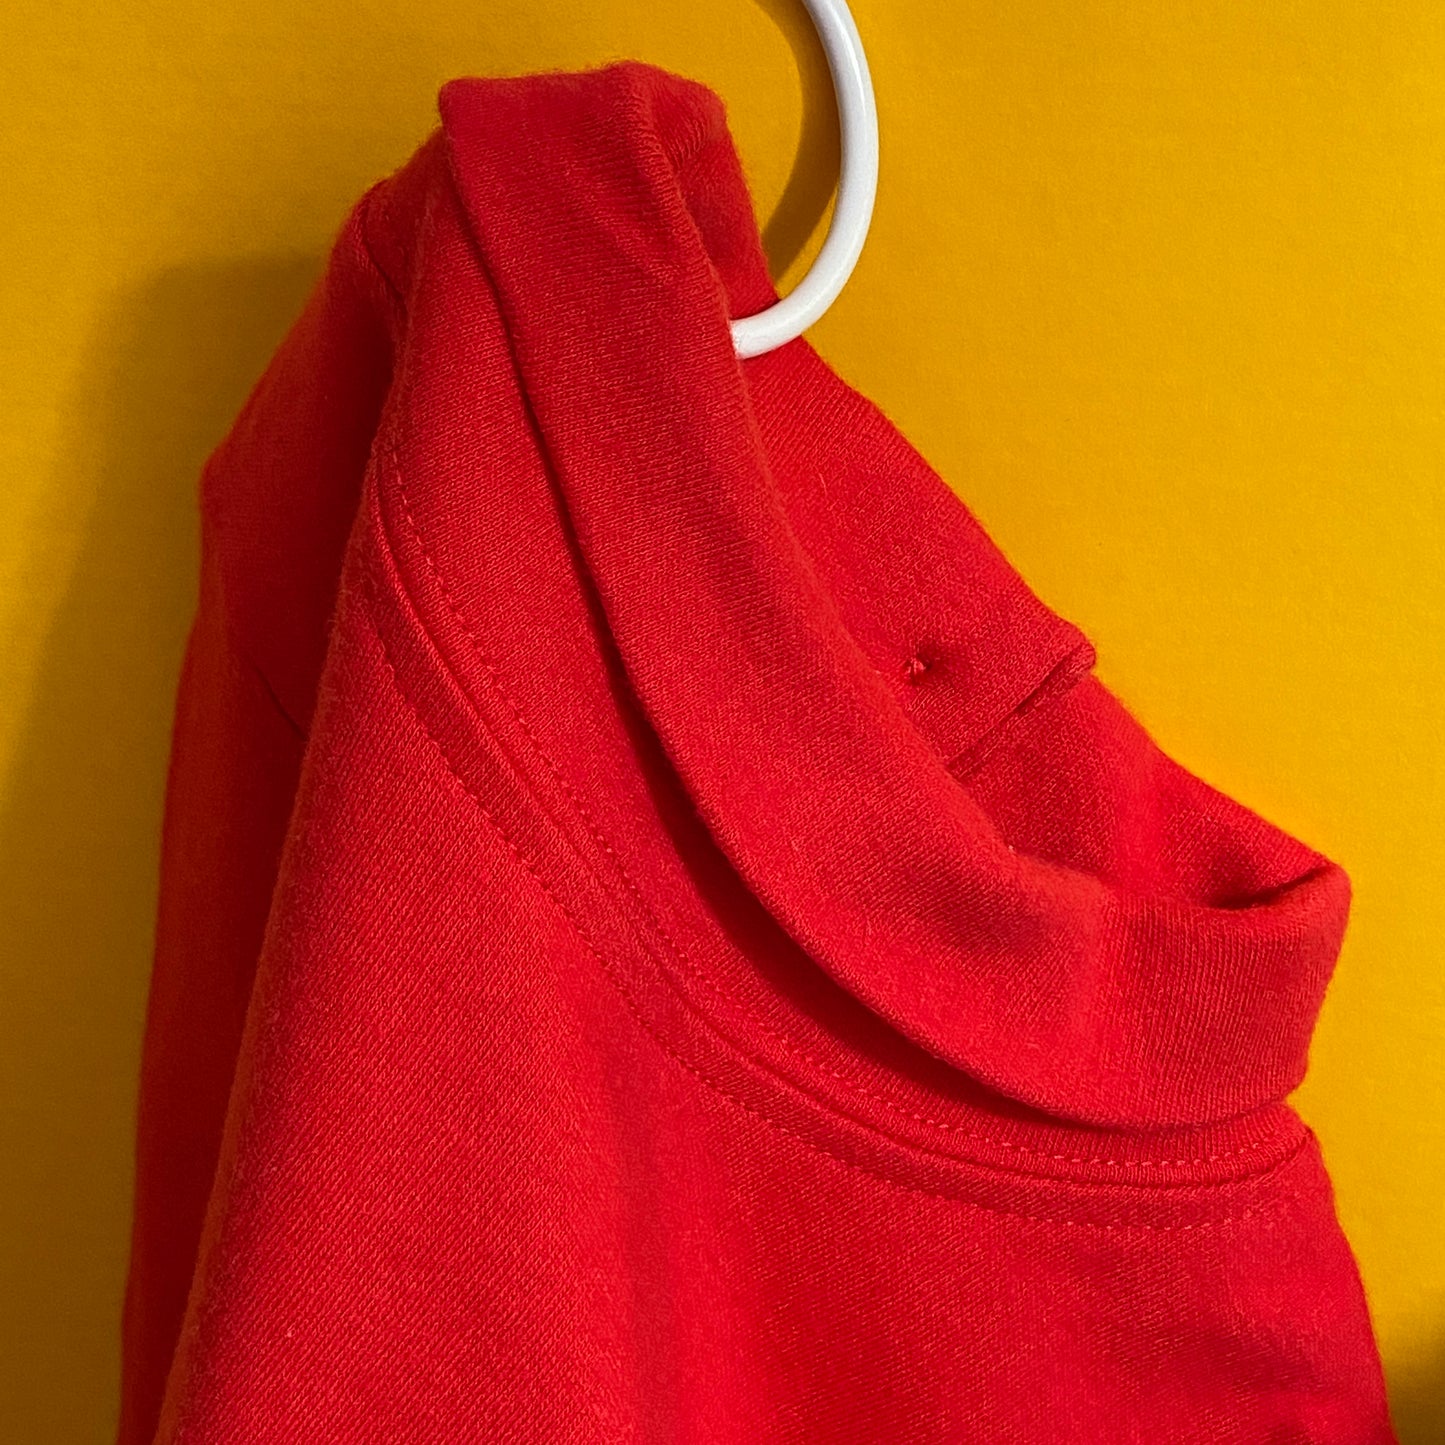 Red Turtleneck Long-Sleeve Shirt (3-6M)